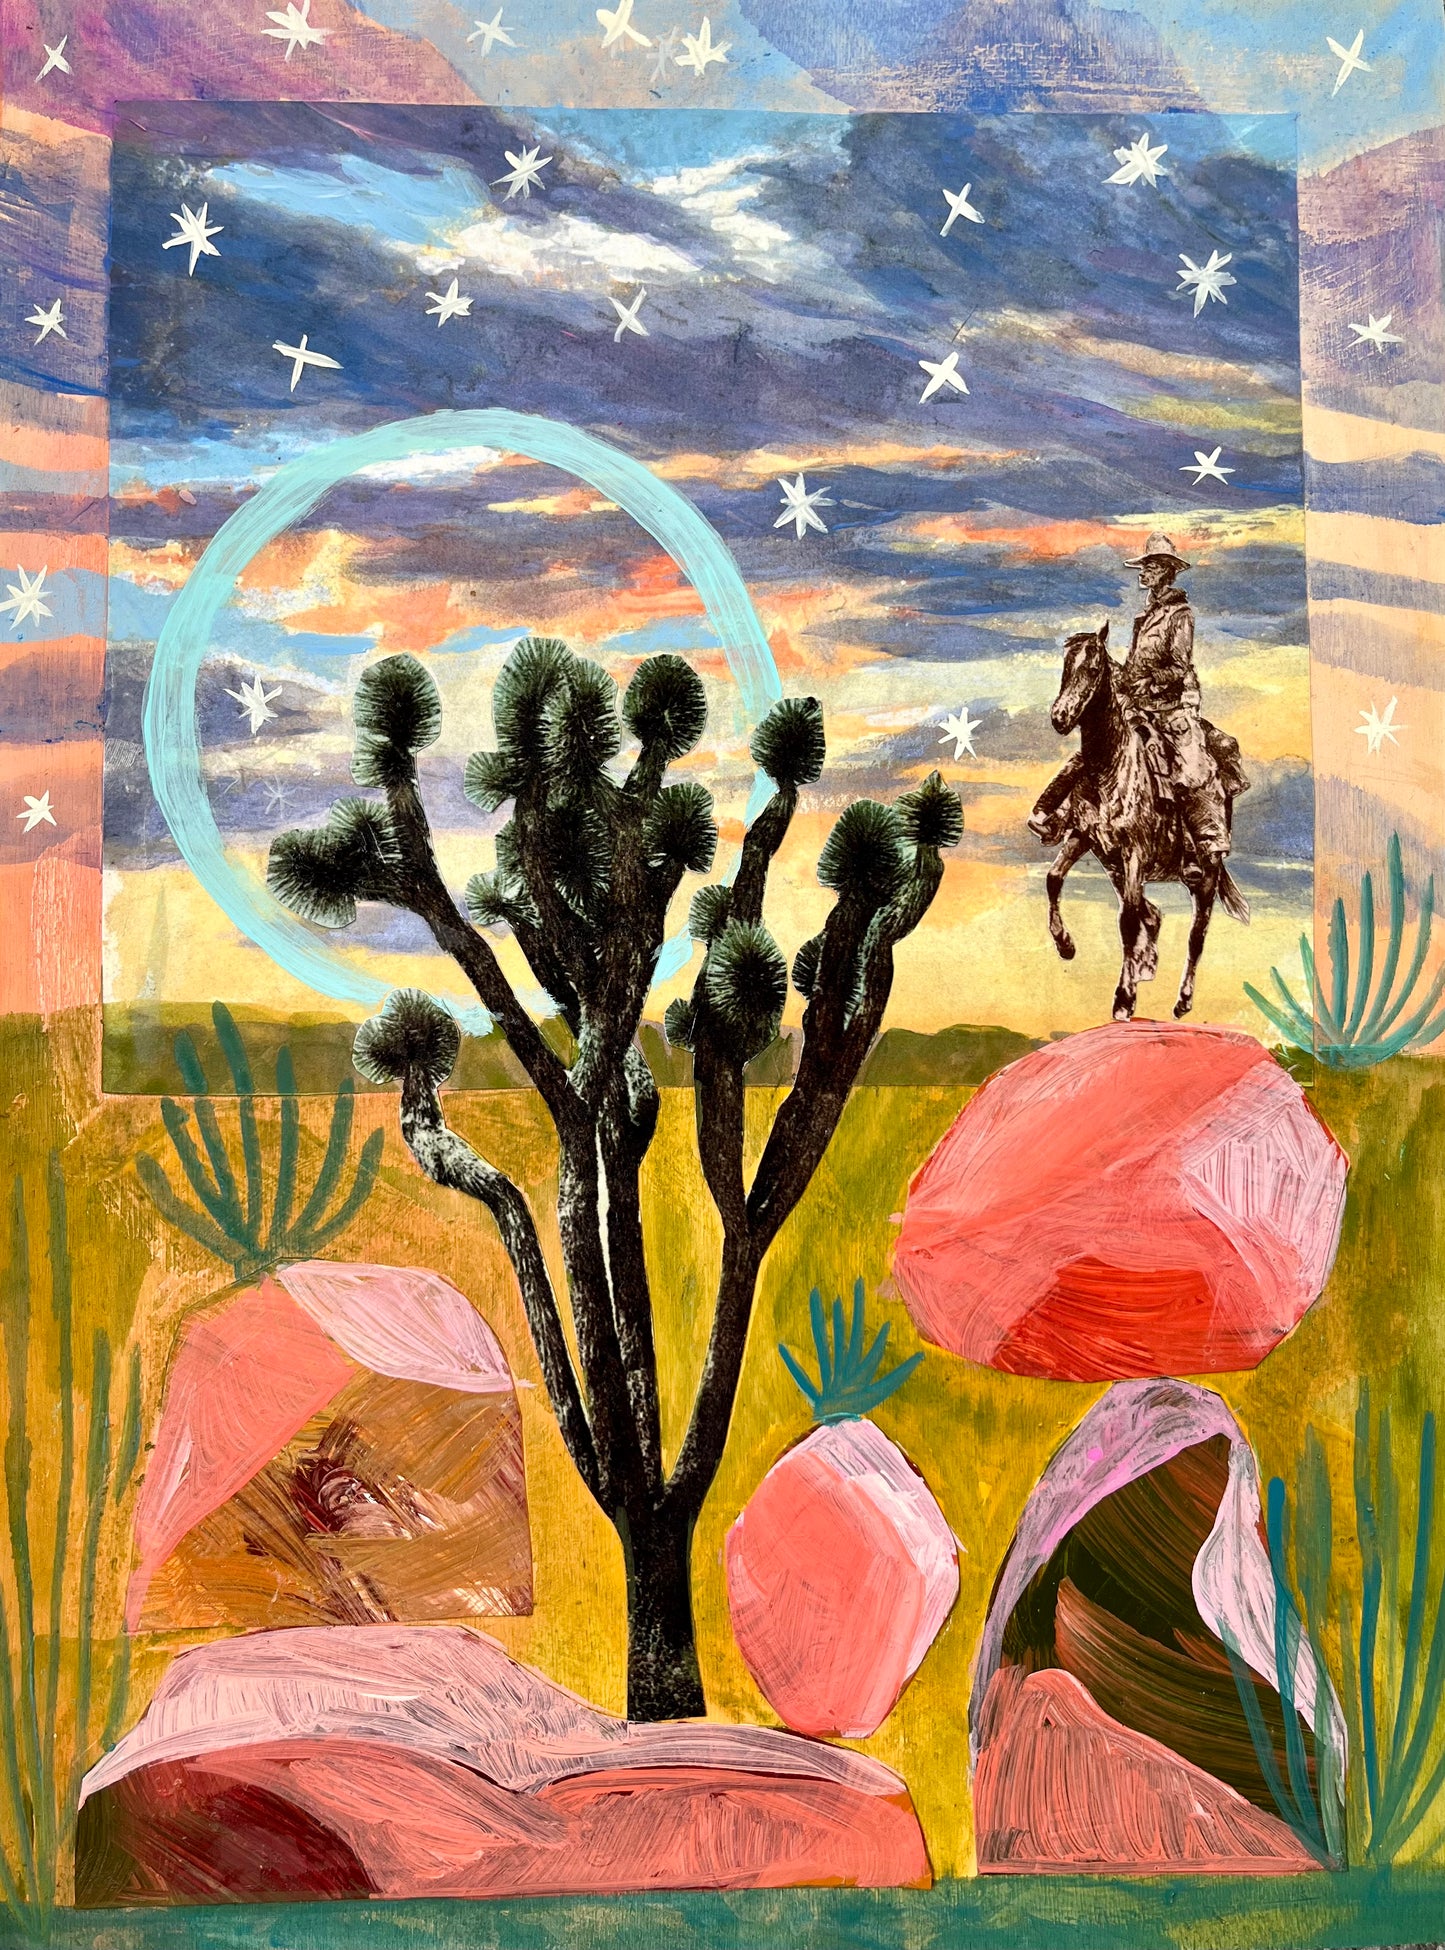 Joshua Tree Desert Rocks Vintage Cowboy Original Collage Artwork - 12x16"